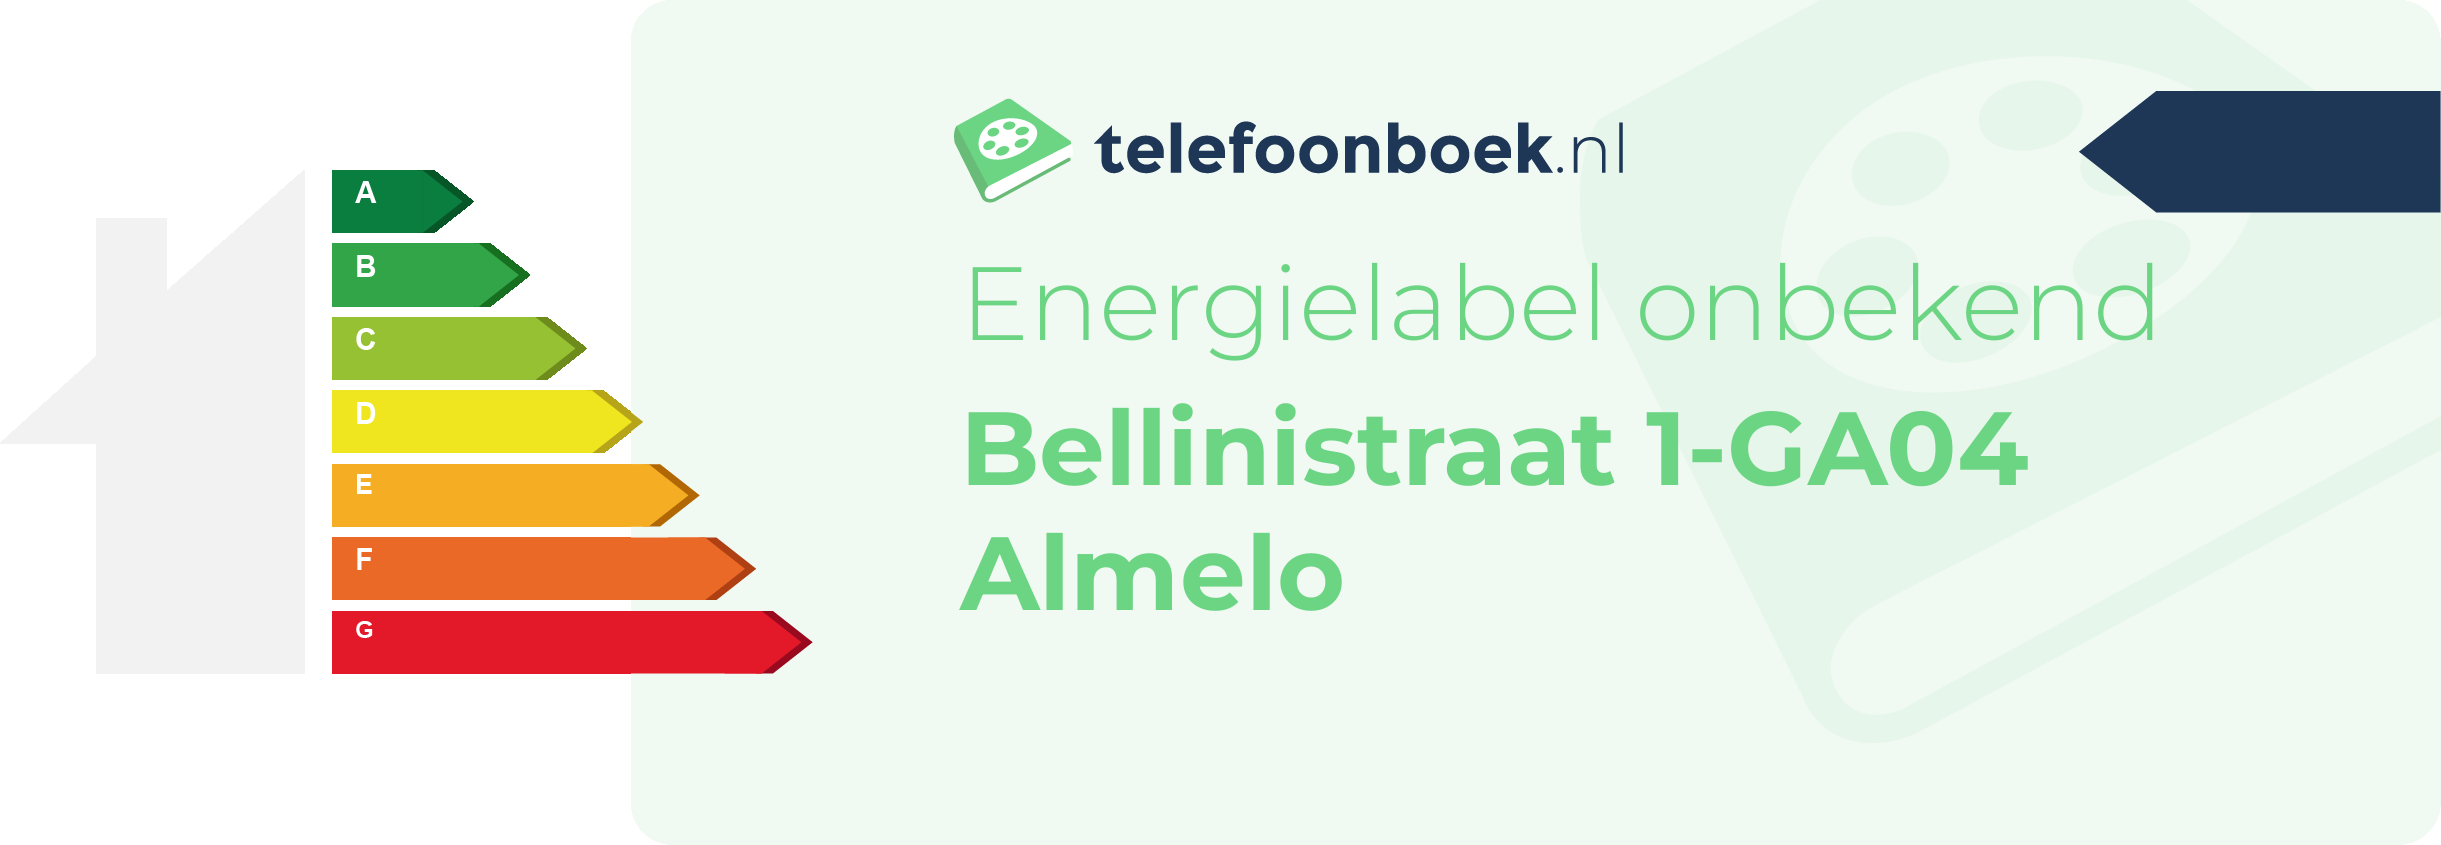 Energielabel Bellinistraat 1-GA04 Almelo